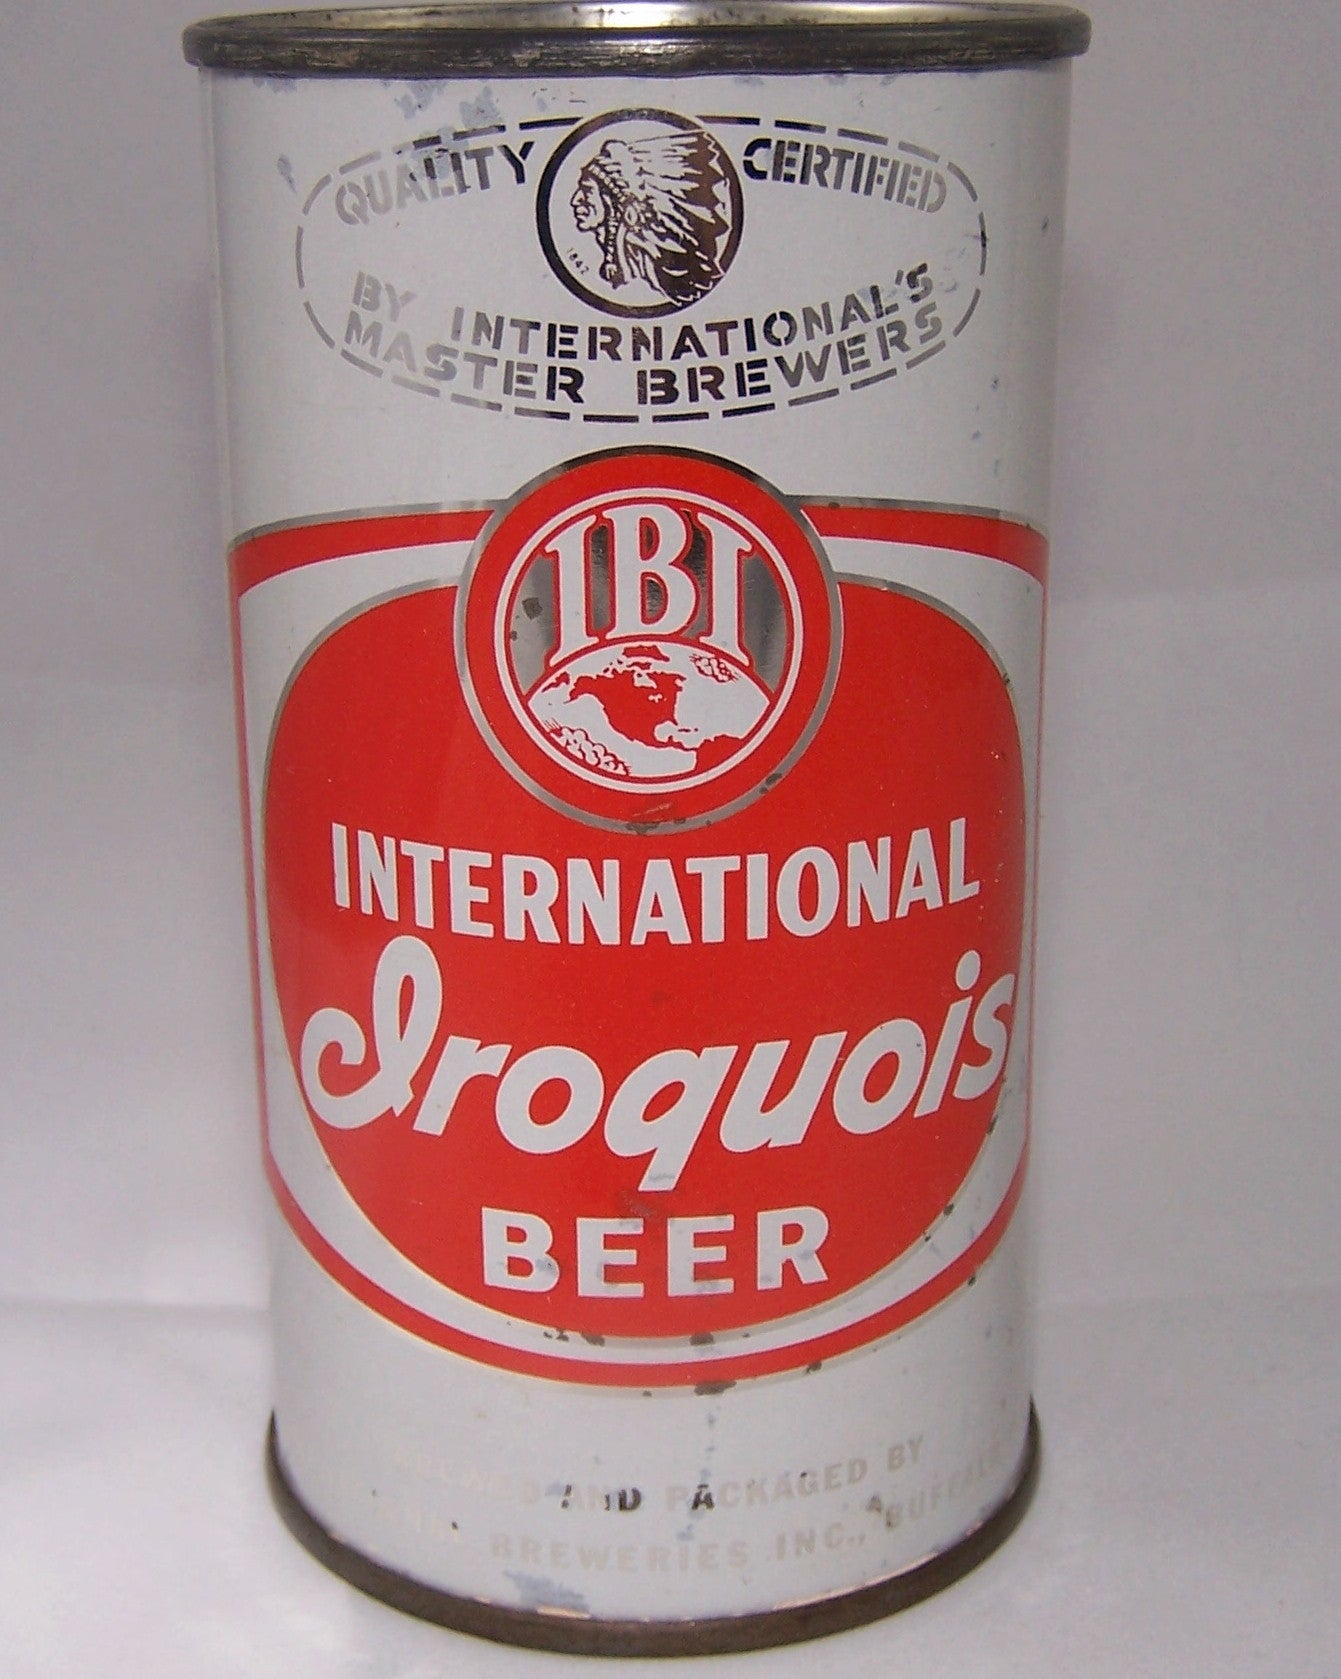 International Iroquois Beer, USBC 85-26. Grade 1/1- Sold on 04/05/16